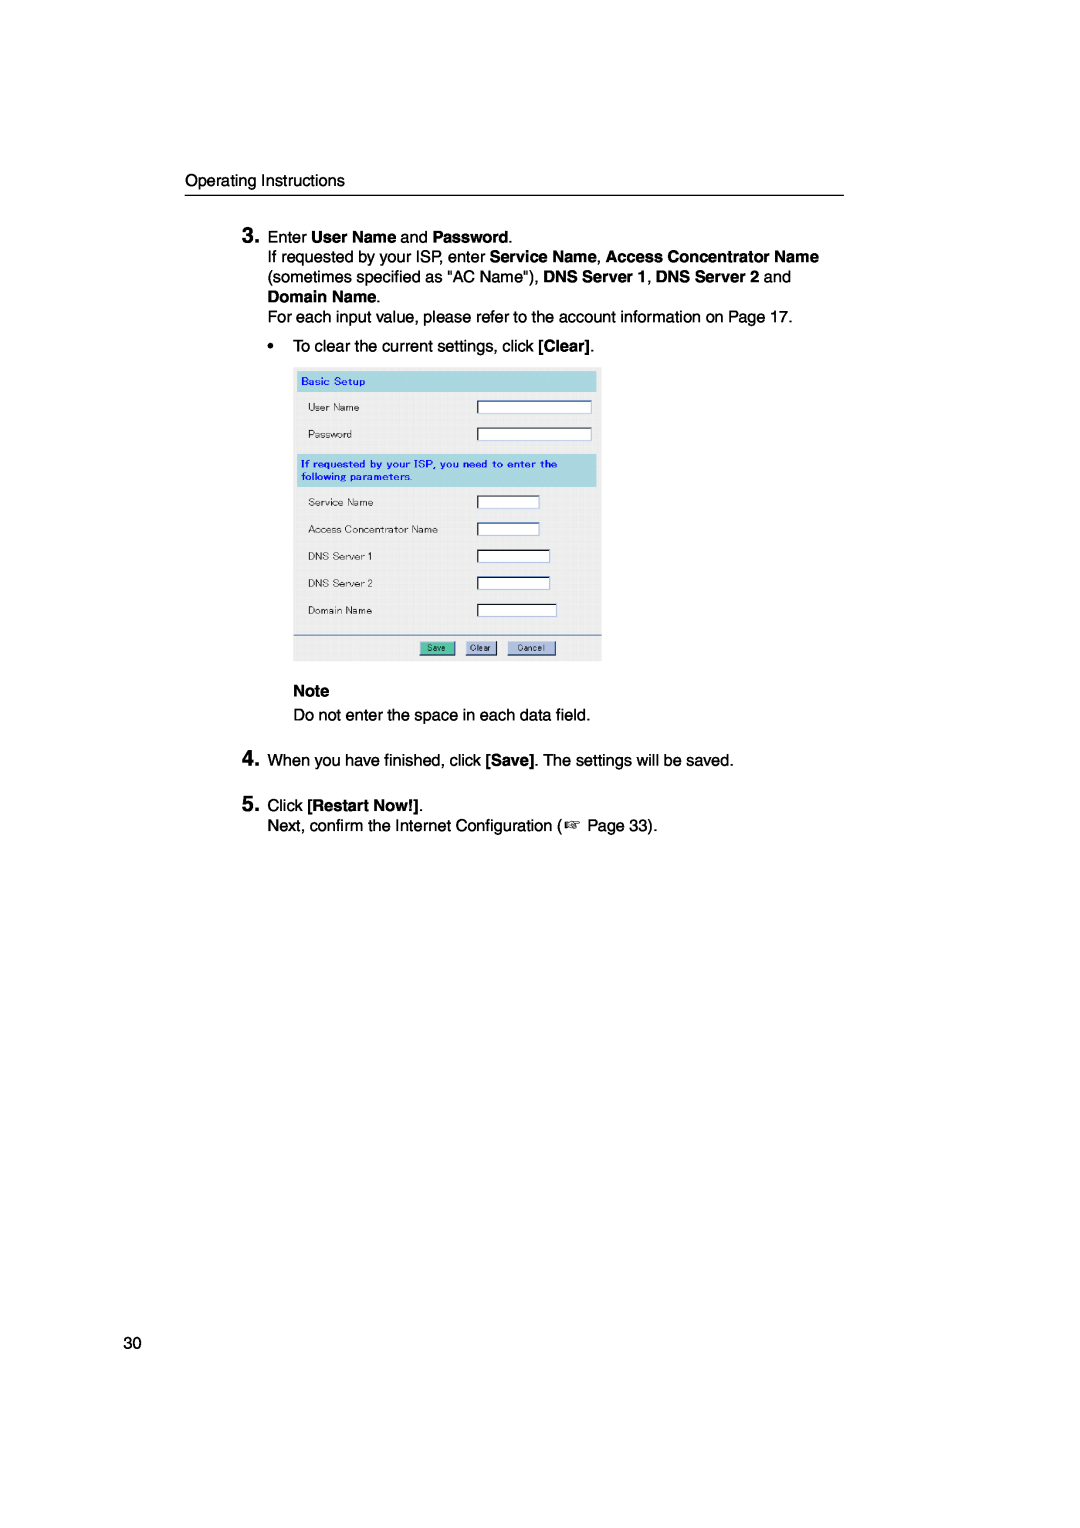 Panasonic KX-HGW600 manual Enter User Name and Password, Click Restart Now 